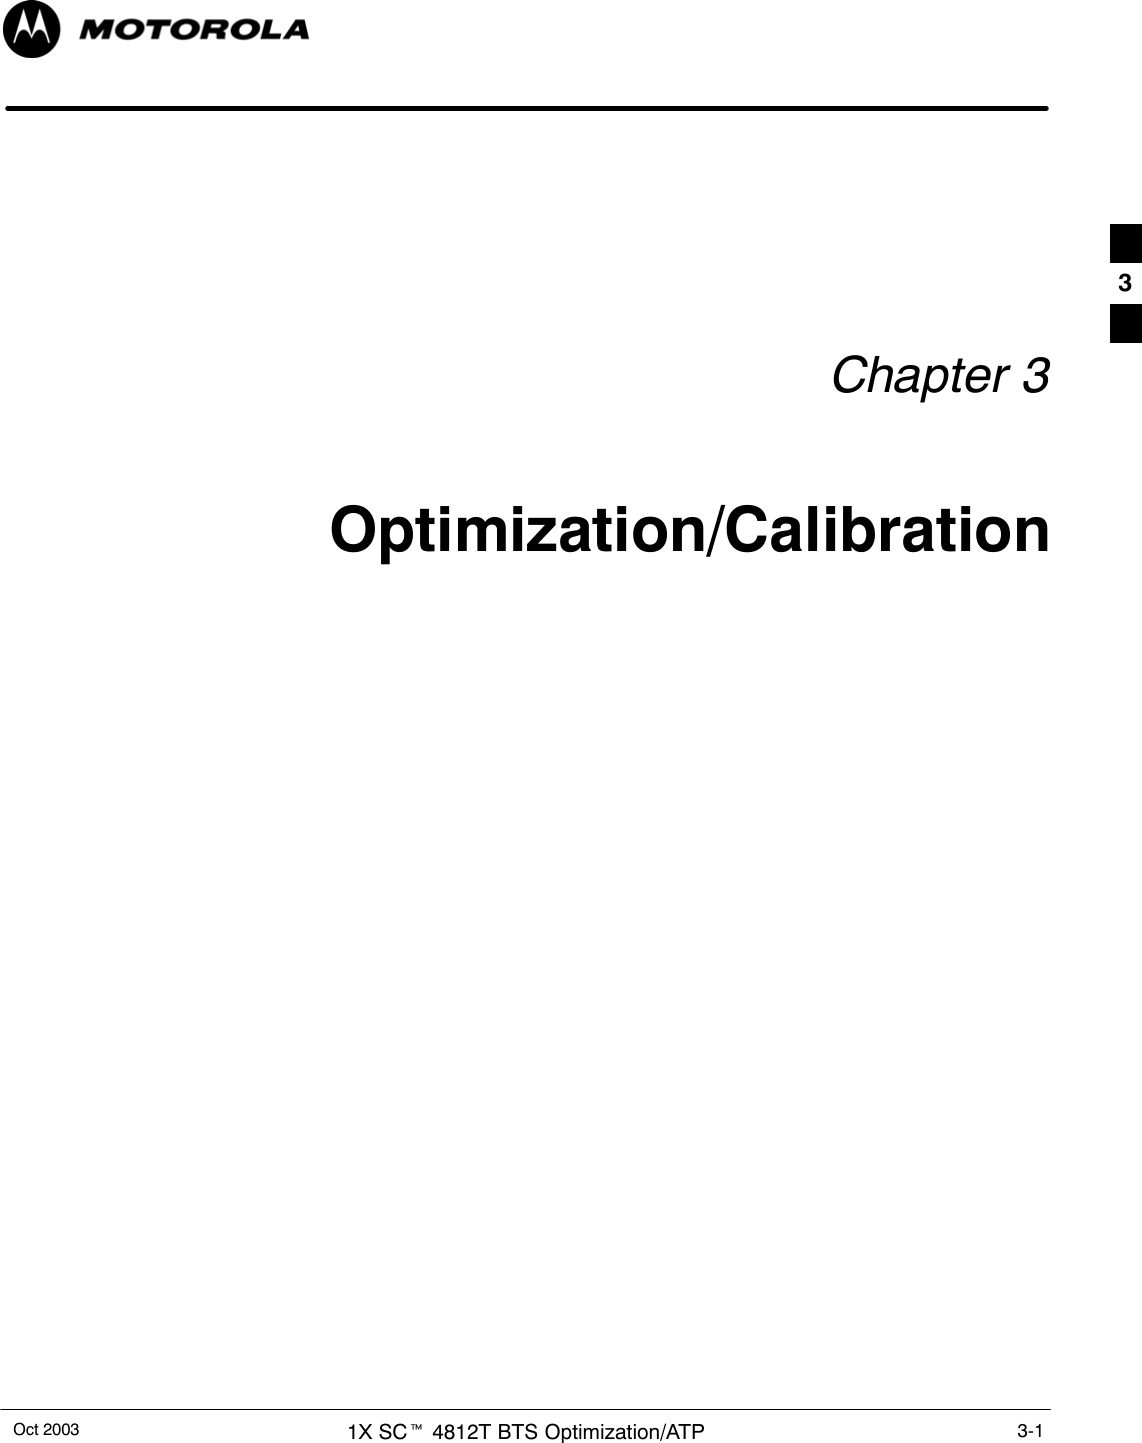 Oct 2003 1X SCt 4812T BTS Optimization/ATP 3-1Chapter 3Optimization/Calibration3